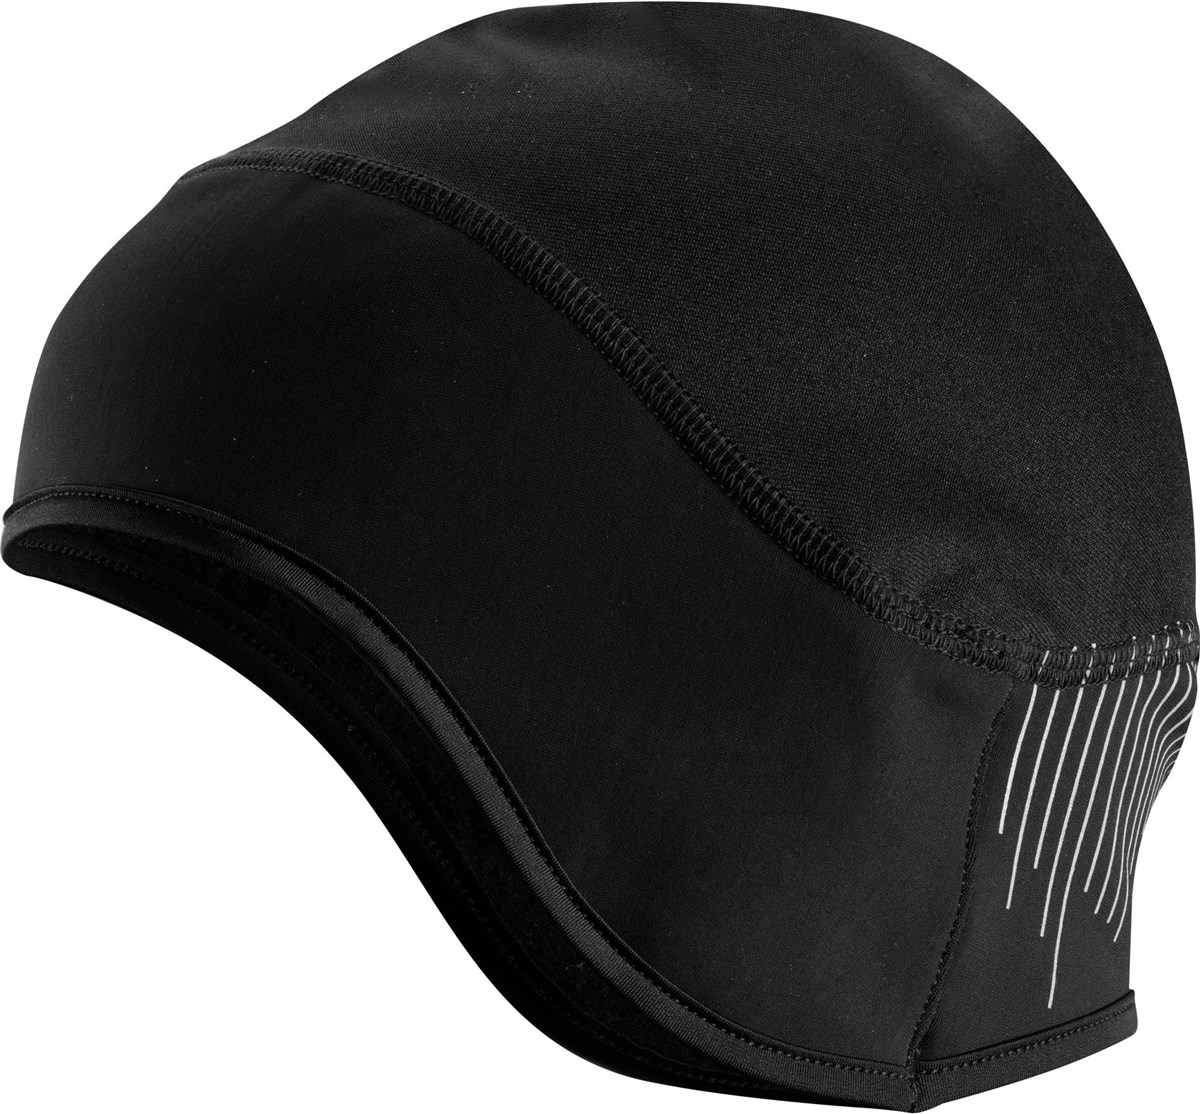 Scott AS 10 Helmet Undercover product image